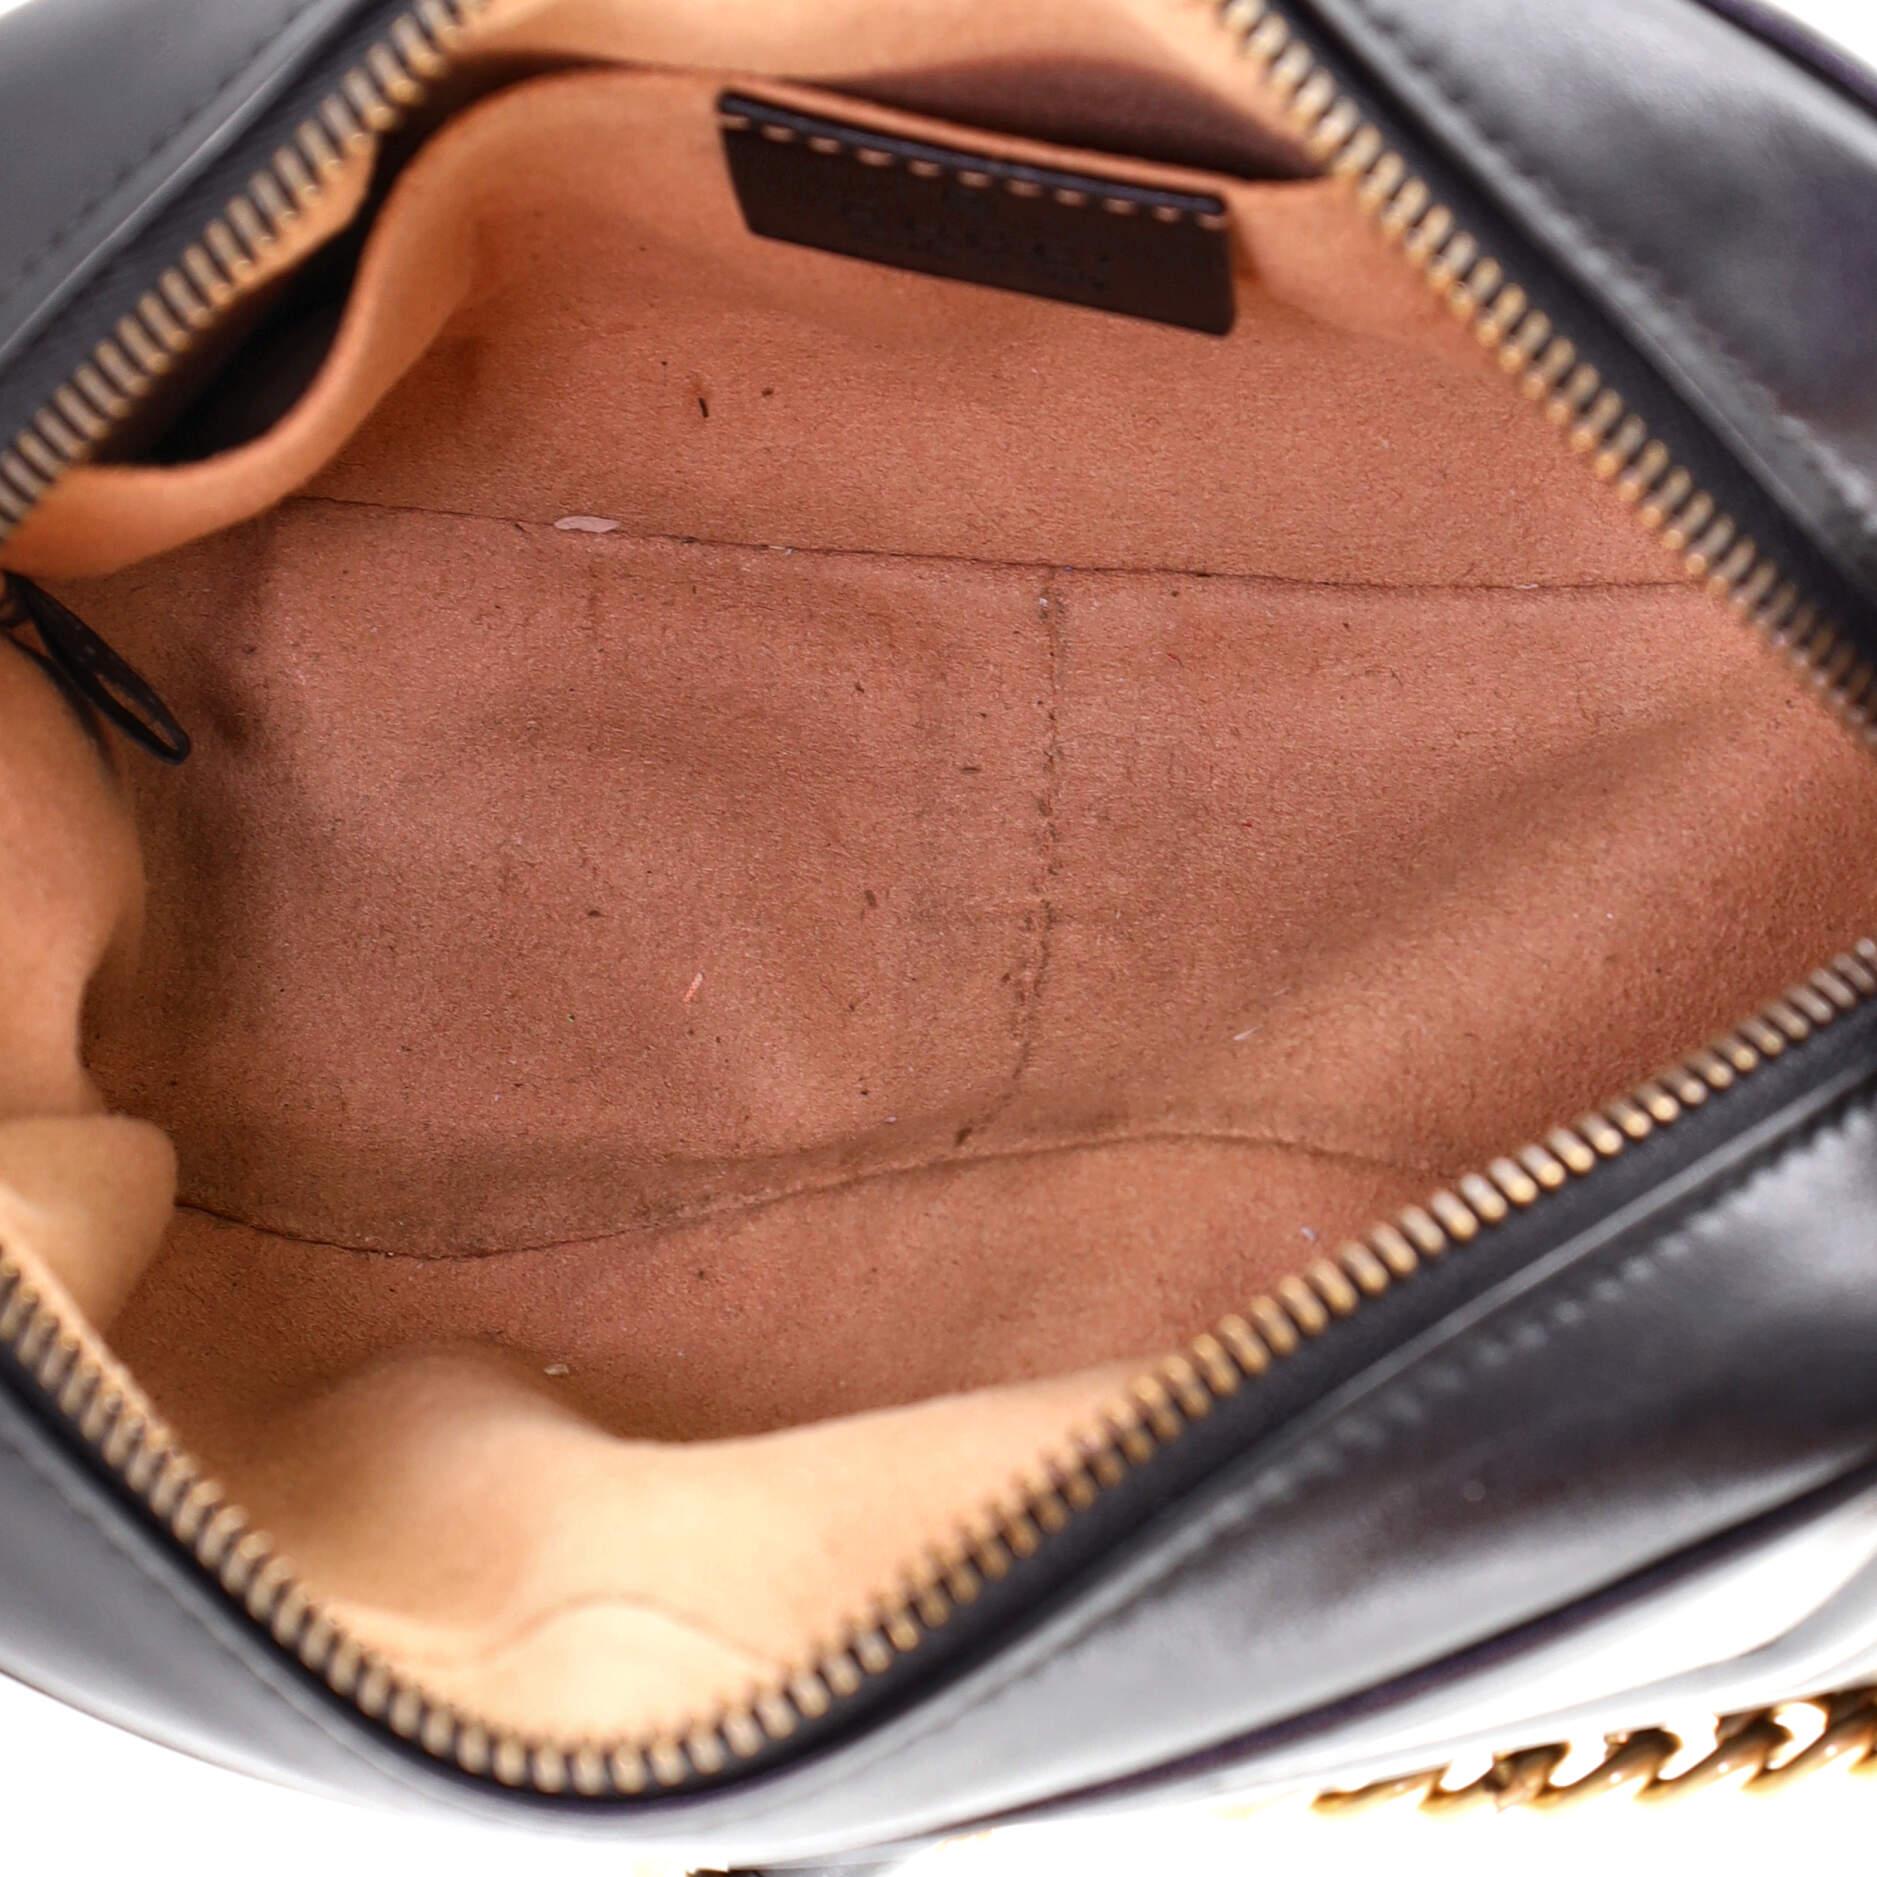 Women's or Men's Gucci GG Marmont Shoulder Bag Matelasse Leather Mini